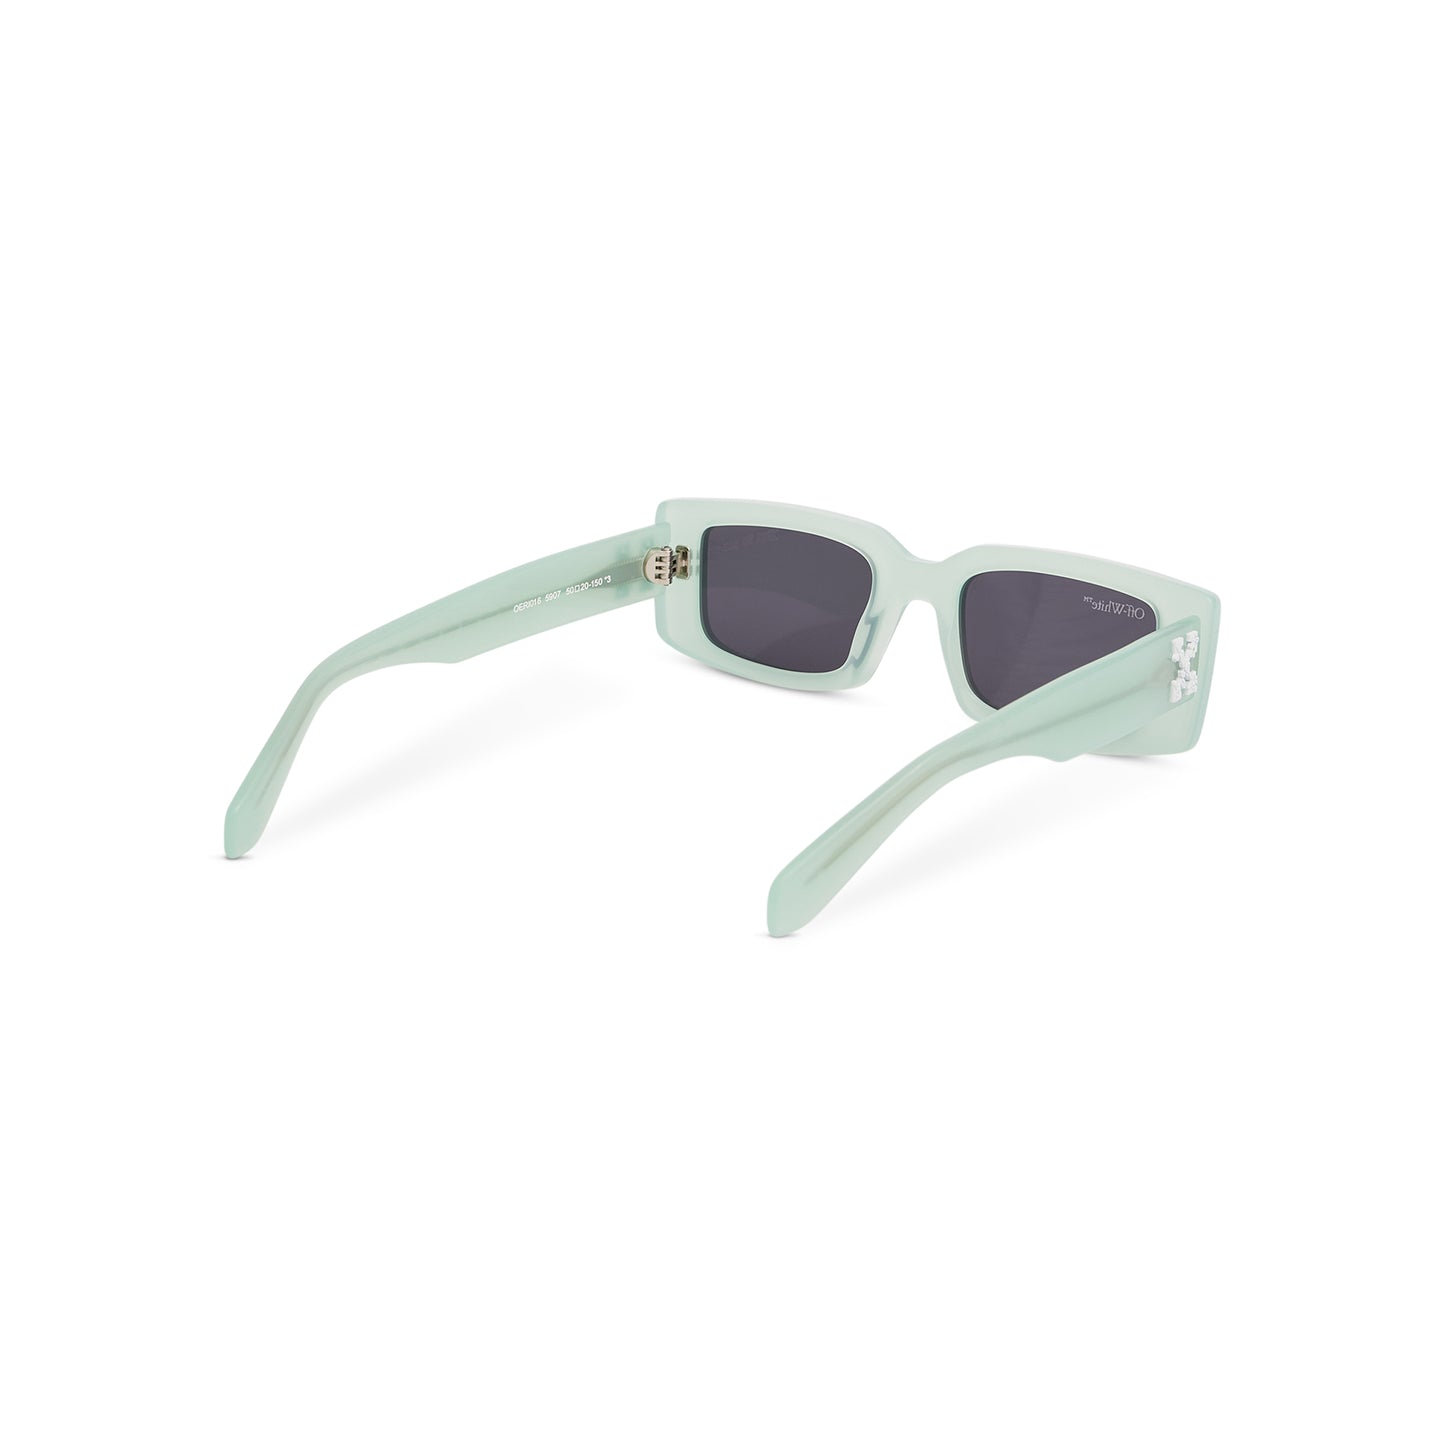 Arthur Sunglasses in Teal/Dark Grey